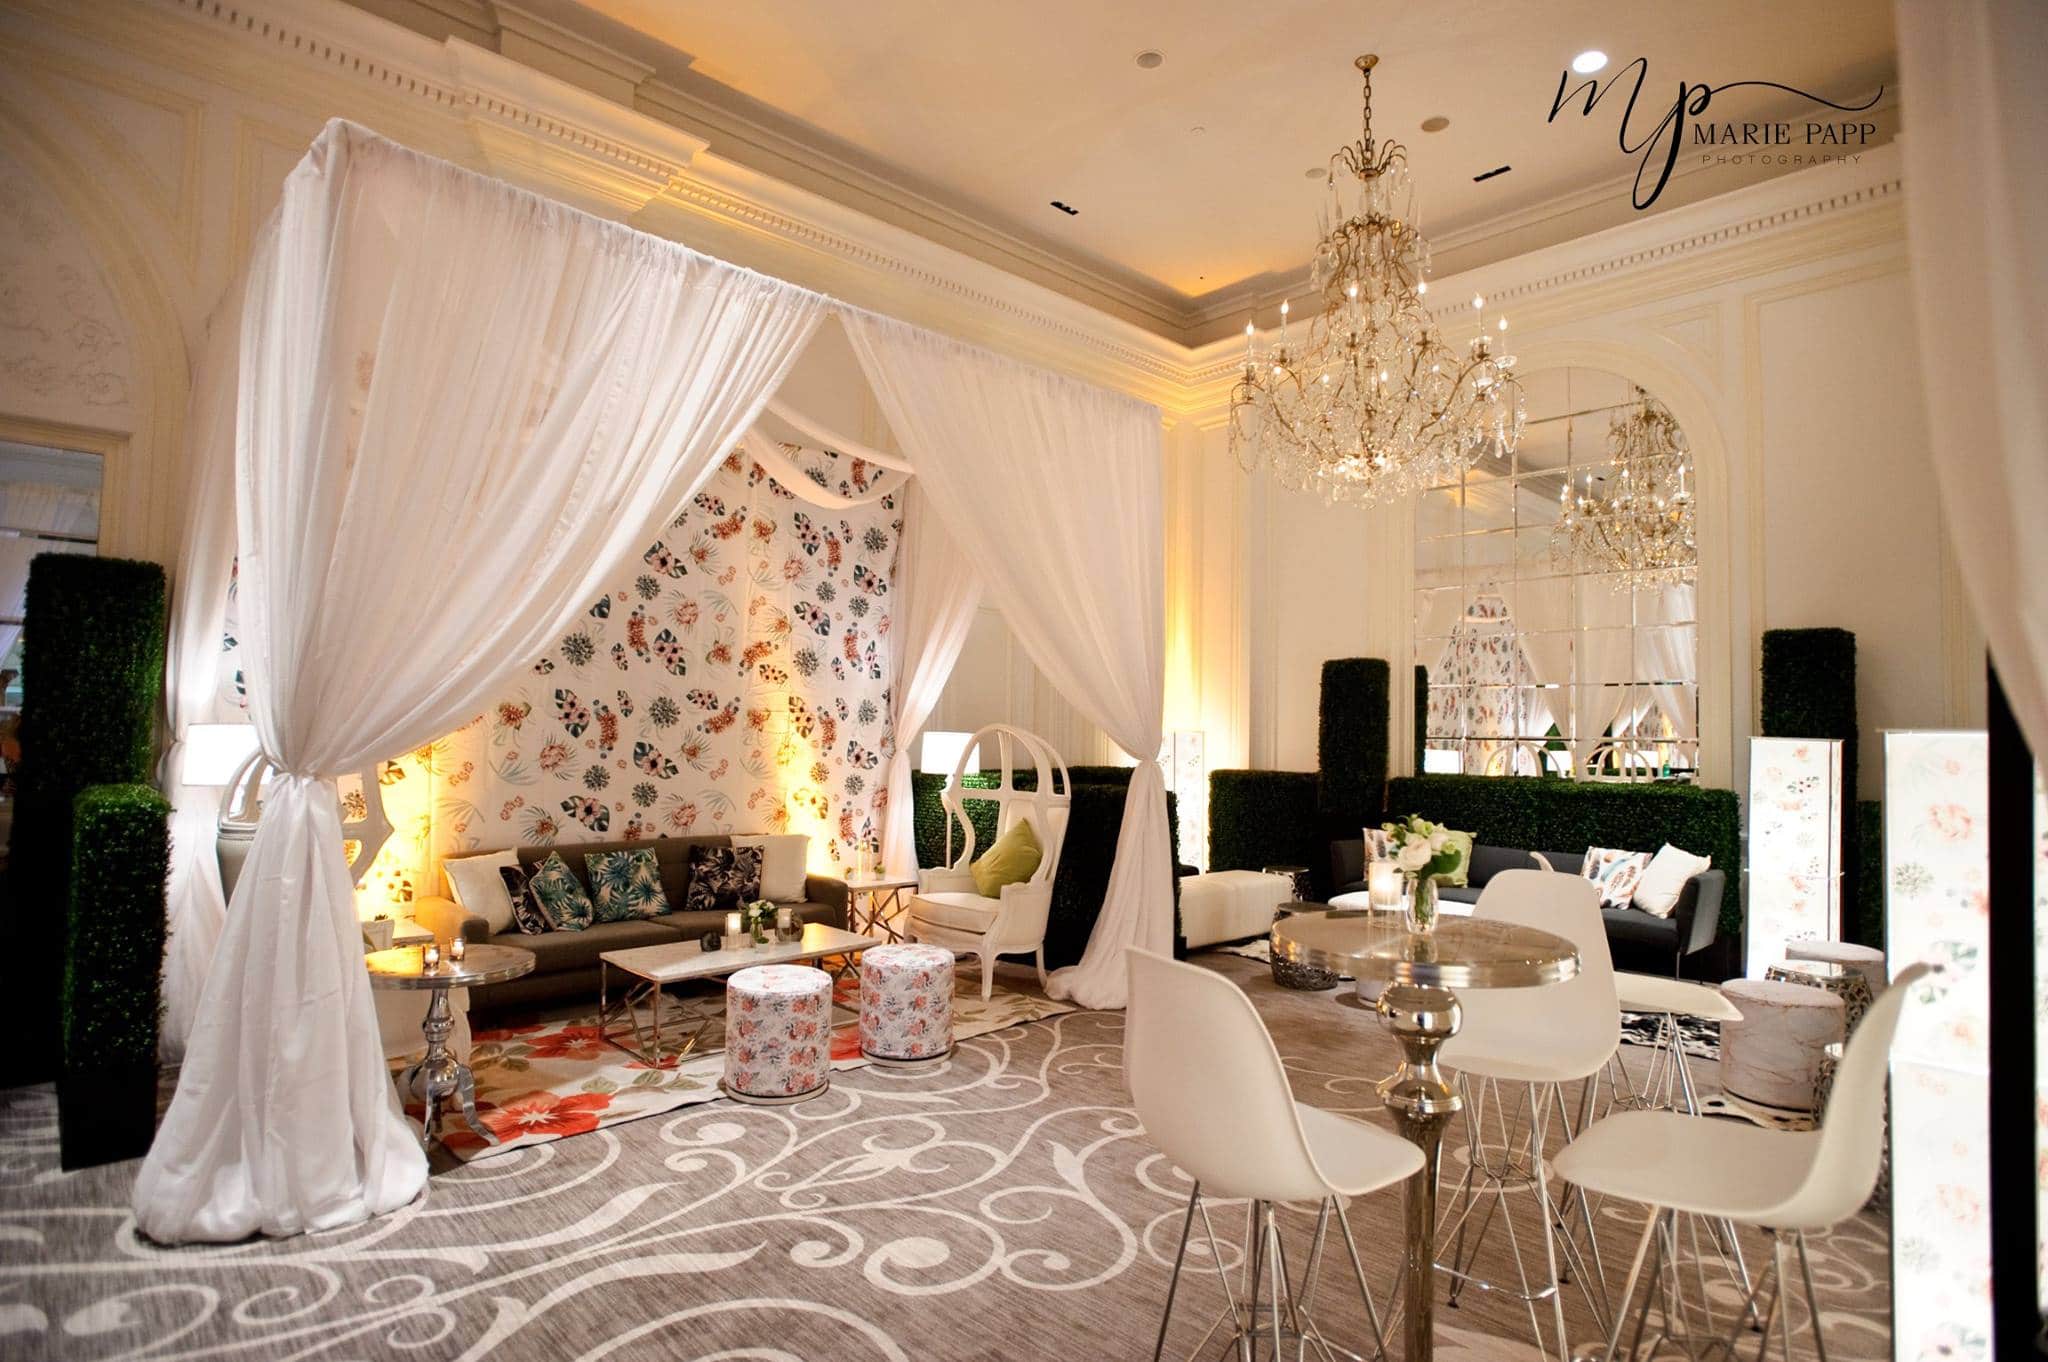 Fun lounge with paisley print, modern chairs and grey swirl rug